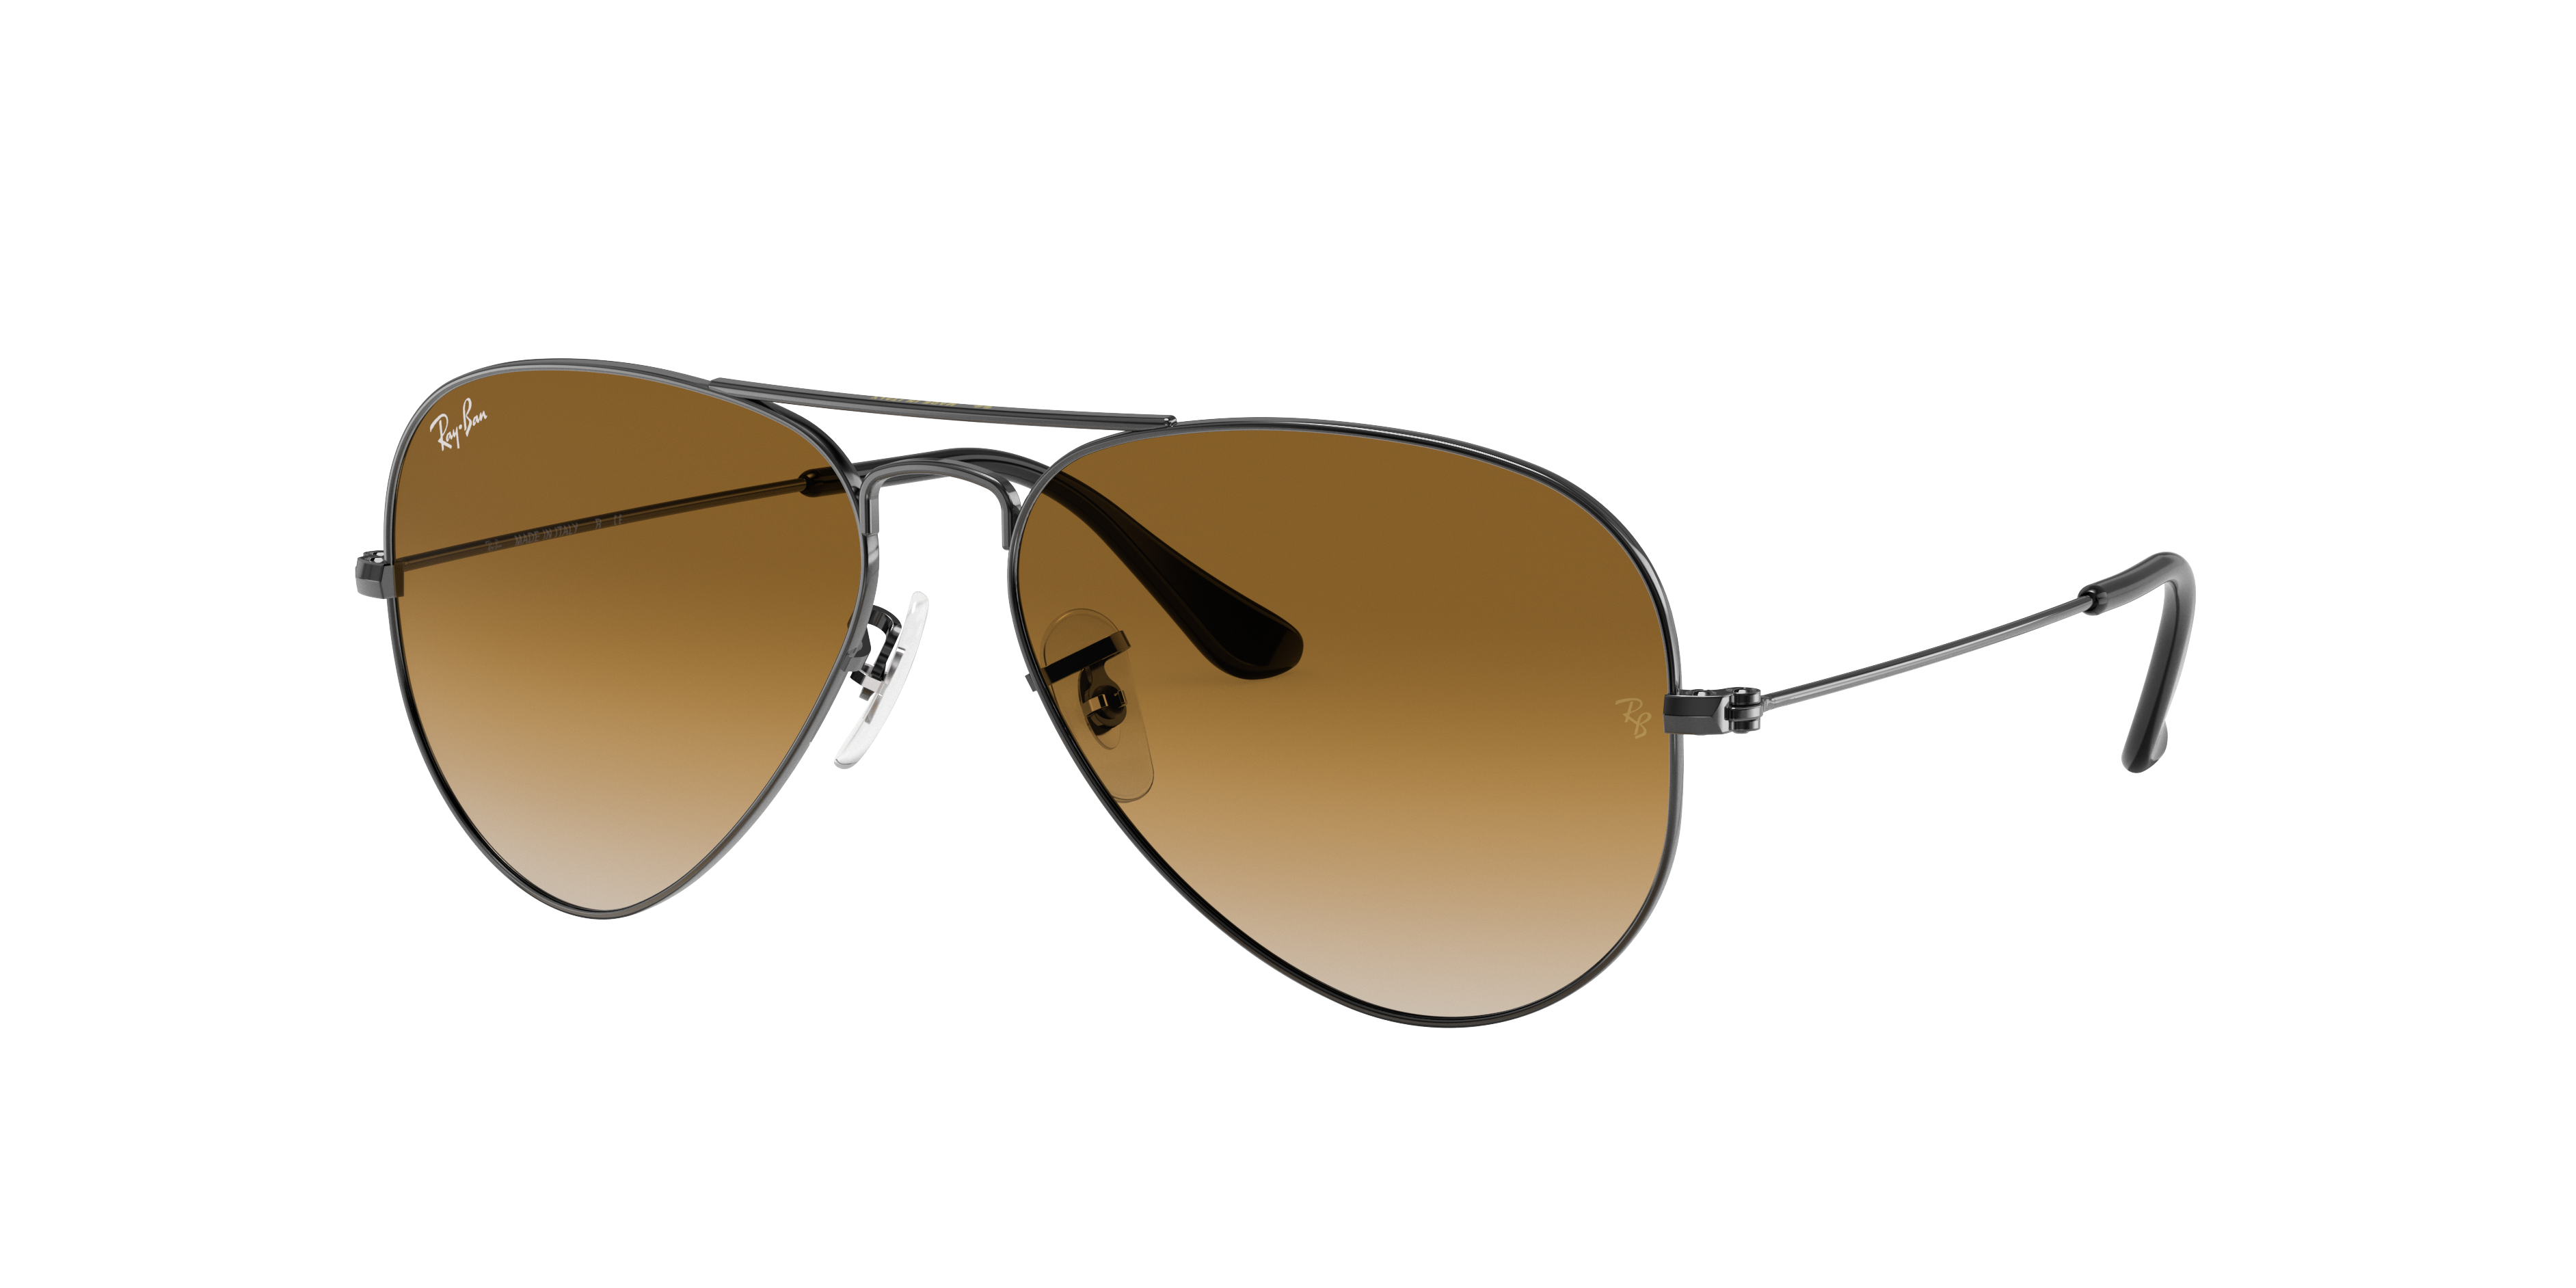 ray ban aviator sunglasses